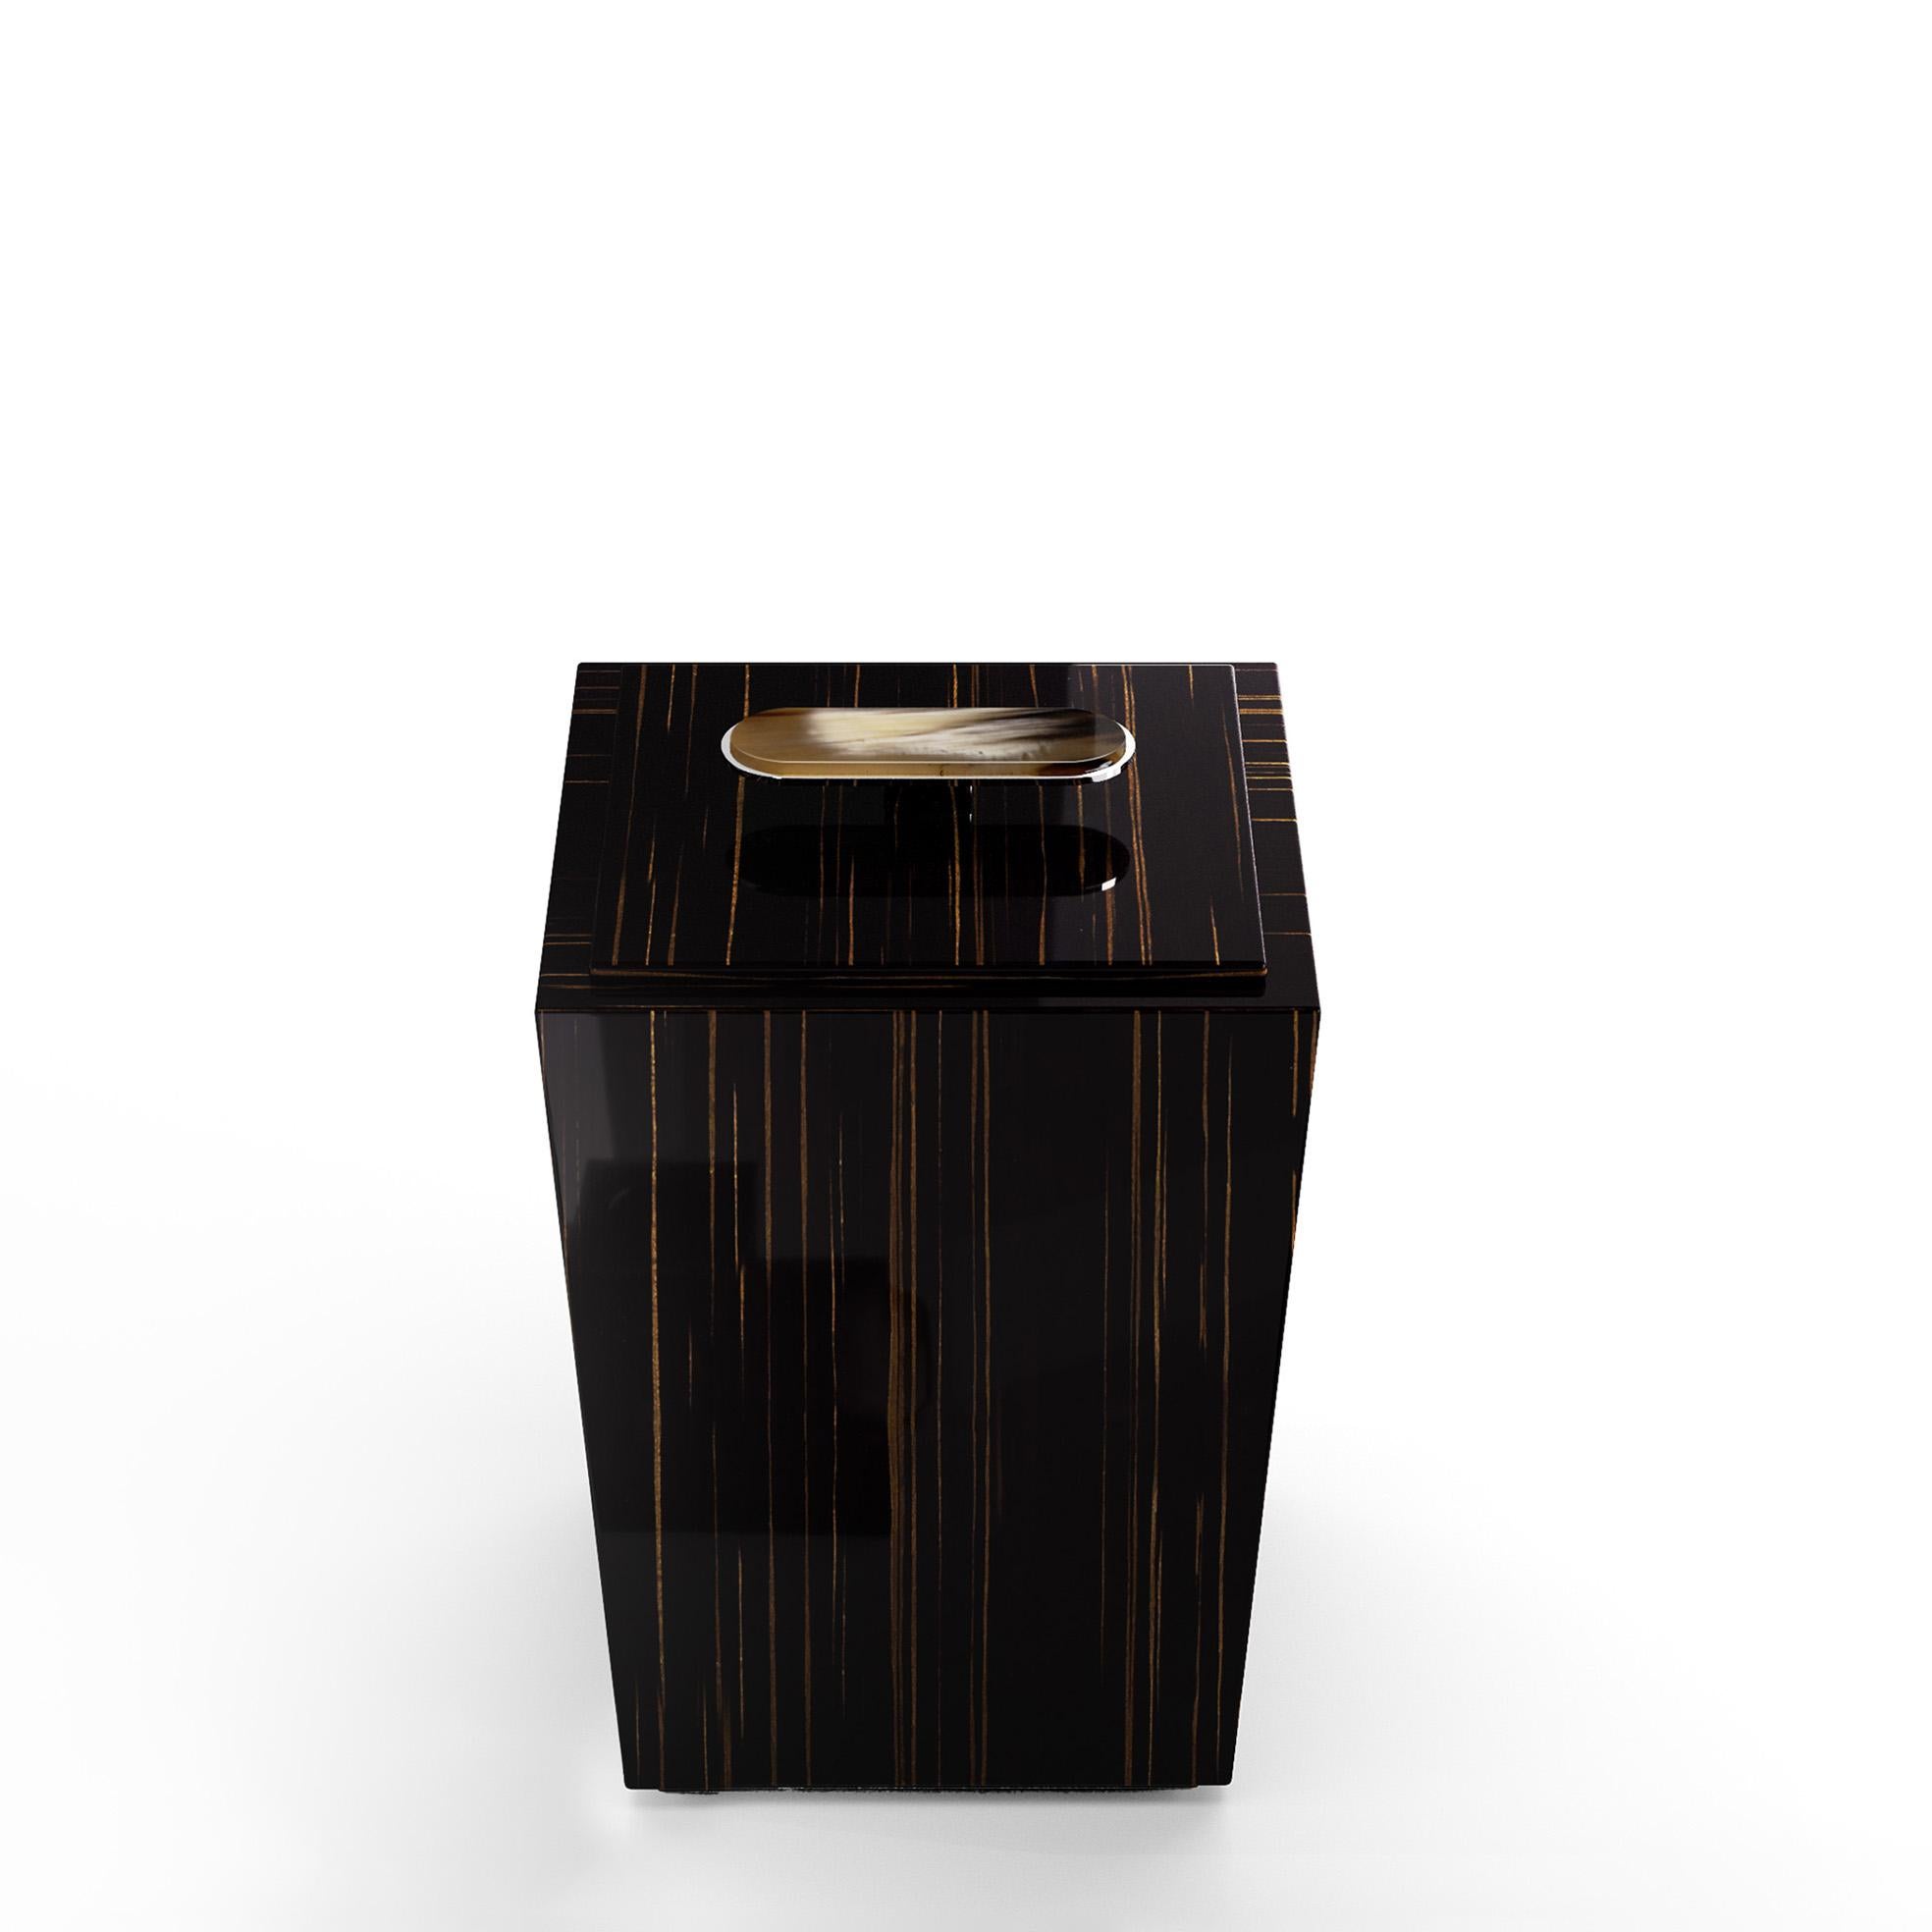 Bicco Waste Paper Basket in Ivory Lacquered Wood and Corno Italiano, Mod. 2425 In New Condition For Sale In Recanati, Macerata